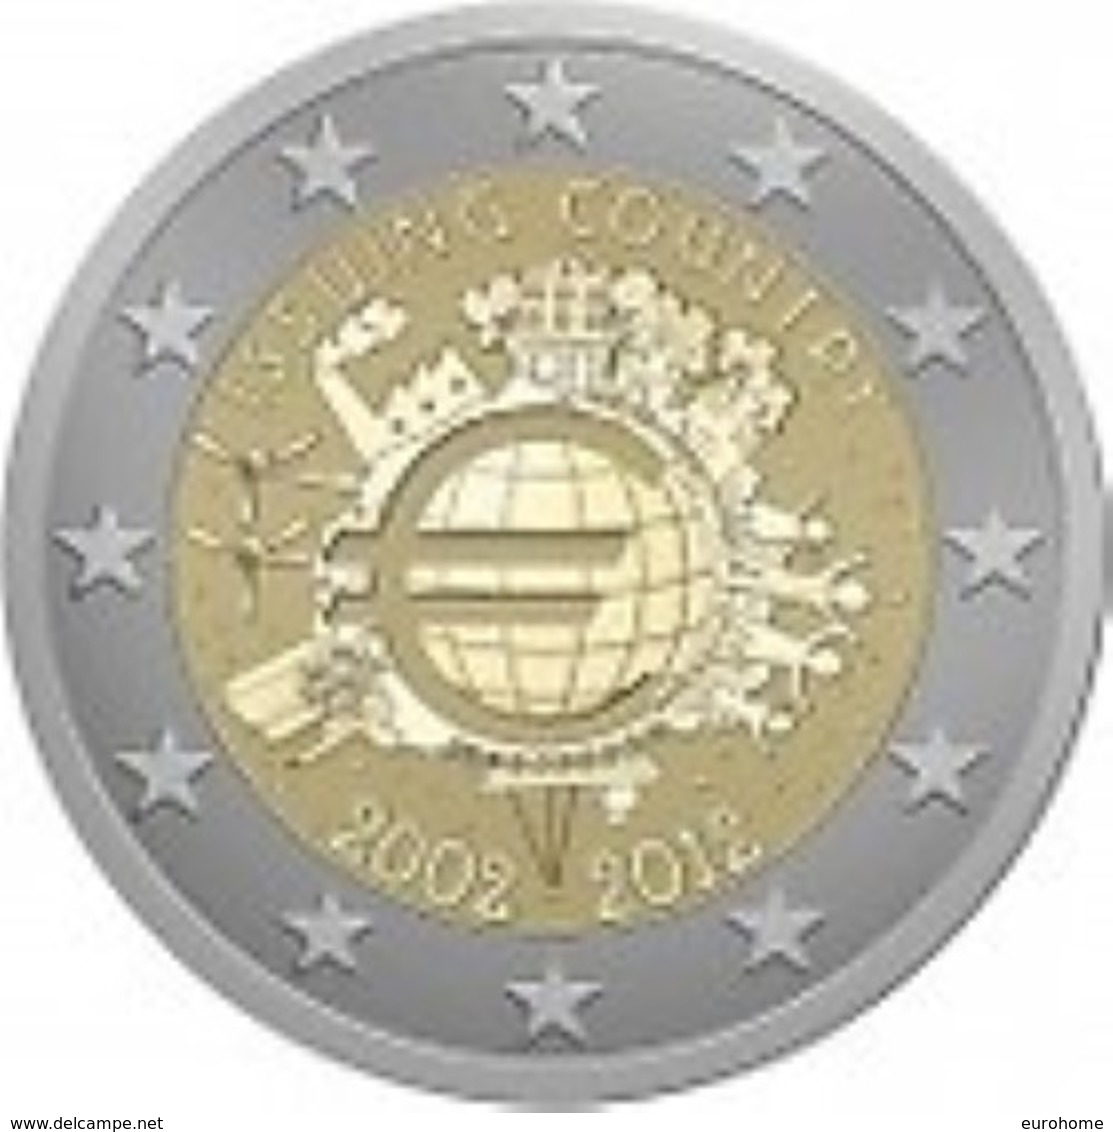 Griekenland 2012    2 Euro Commemo   10 Jaar Euro UNC Uit De Rol  UNC Du Rouleaux  !! - Greece